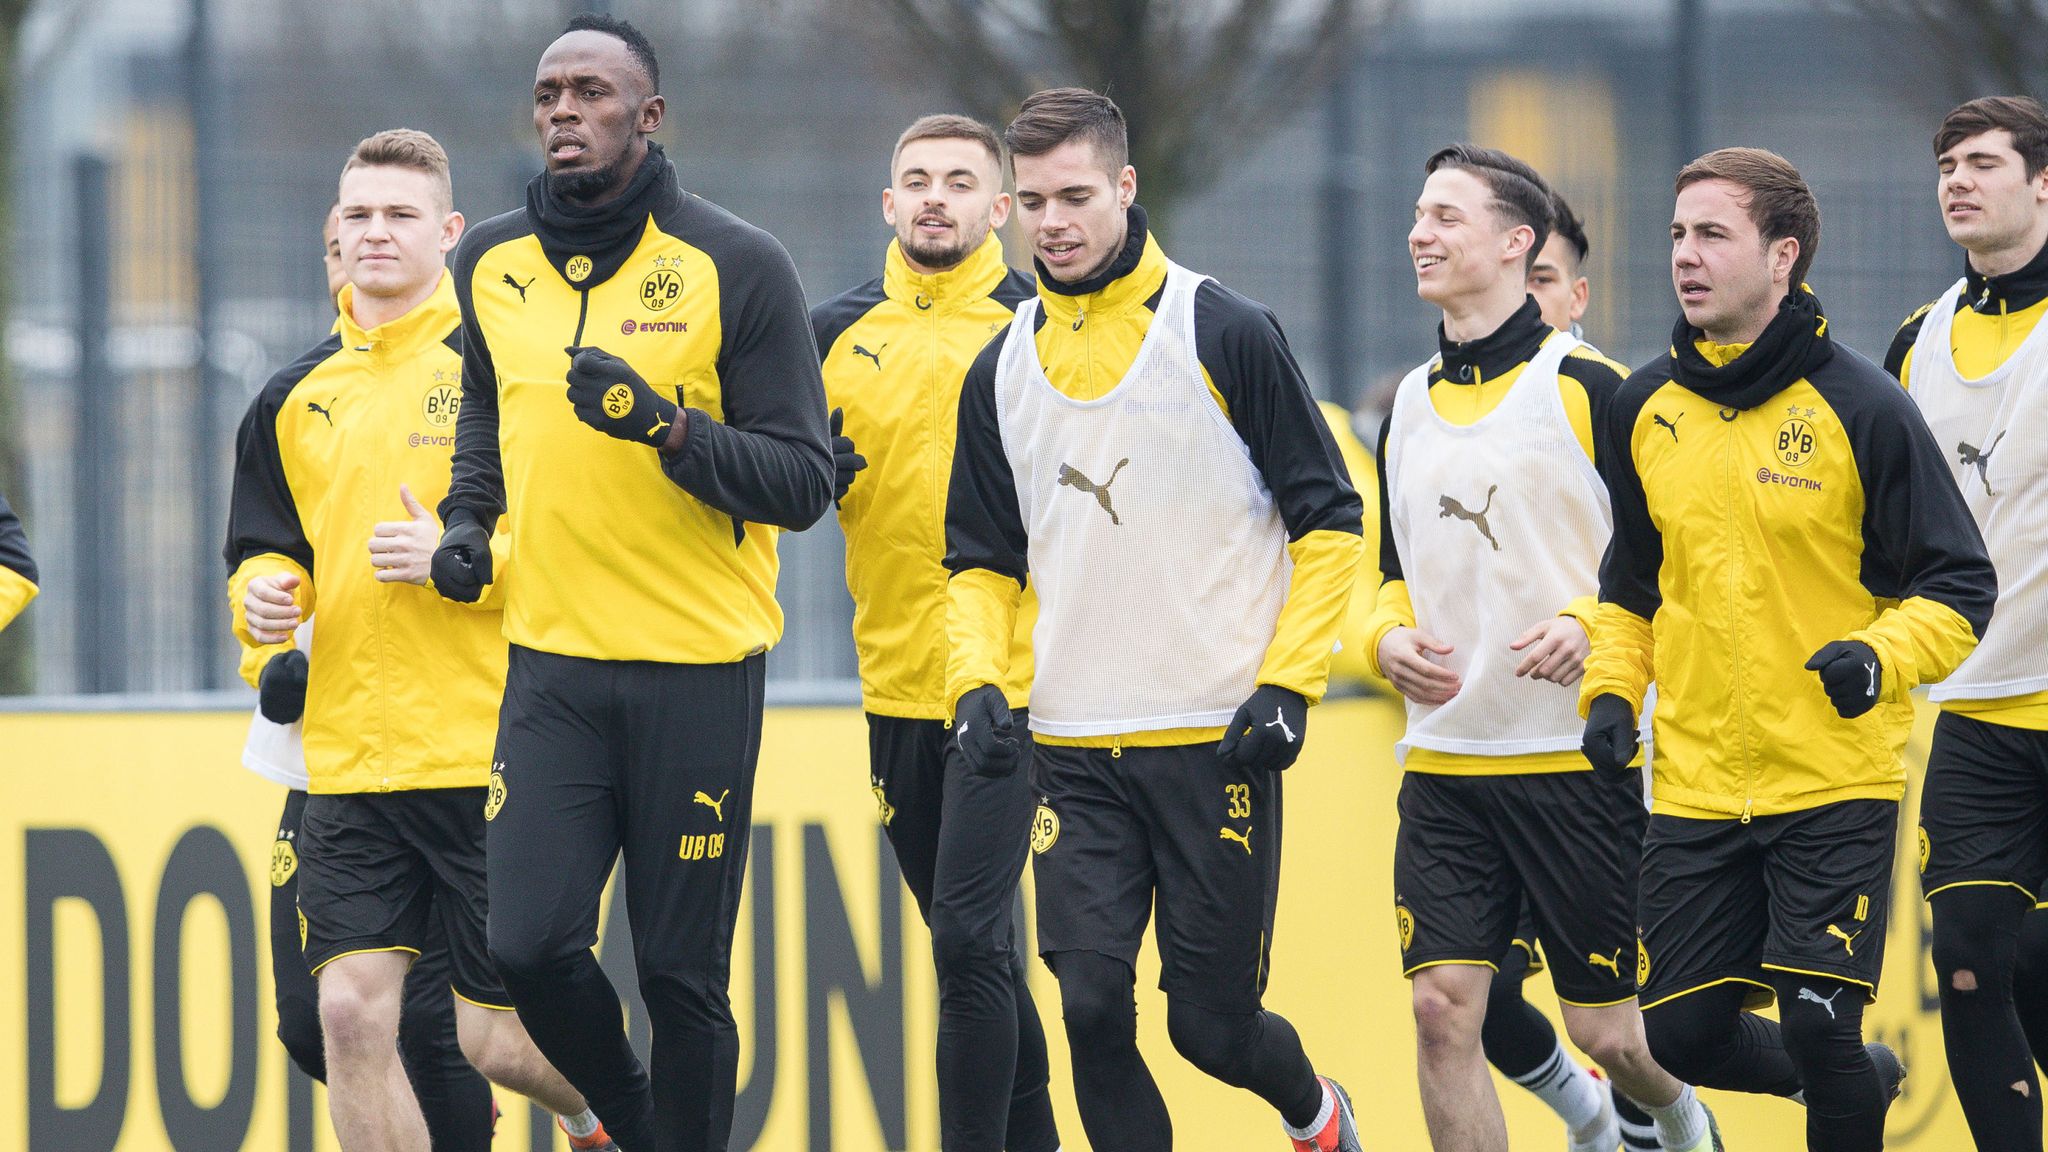 Usain Bolt has first session Borussia Dortmund | Football | Sky Sports